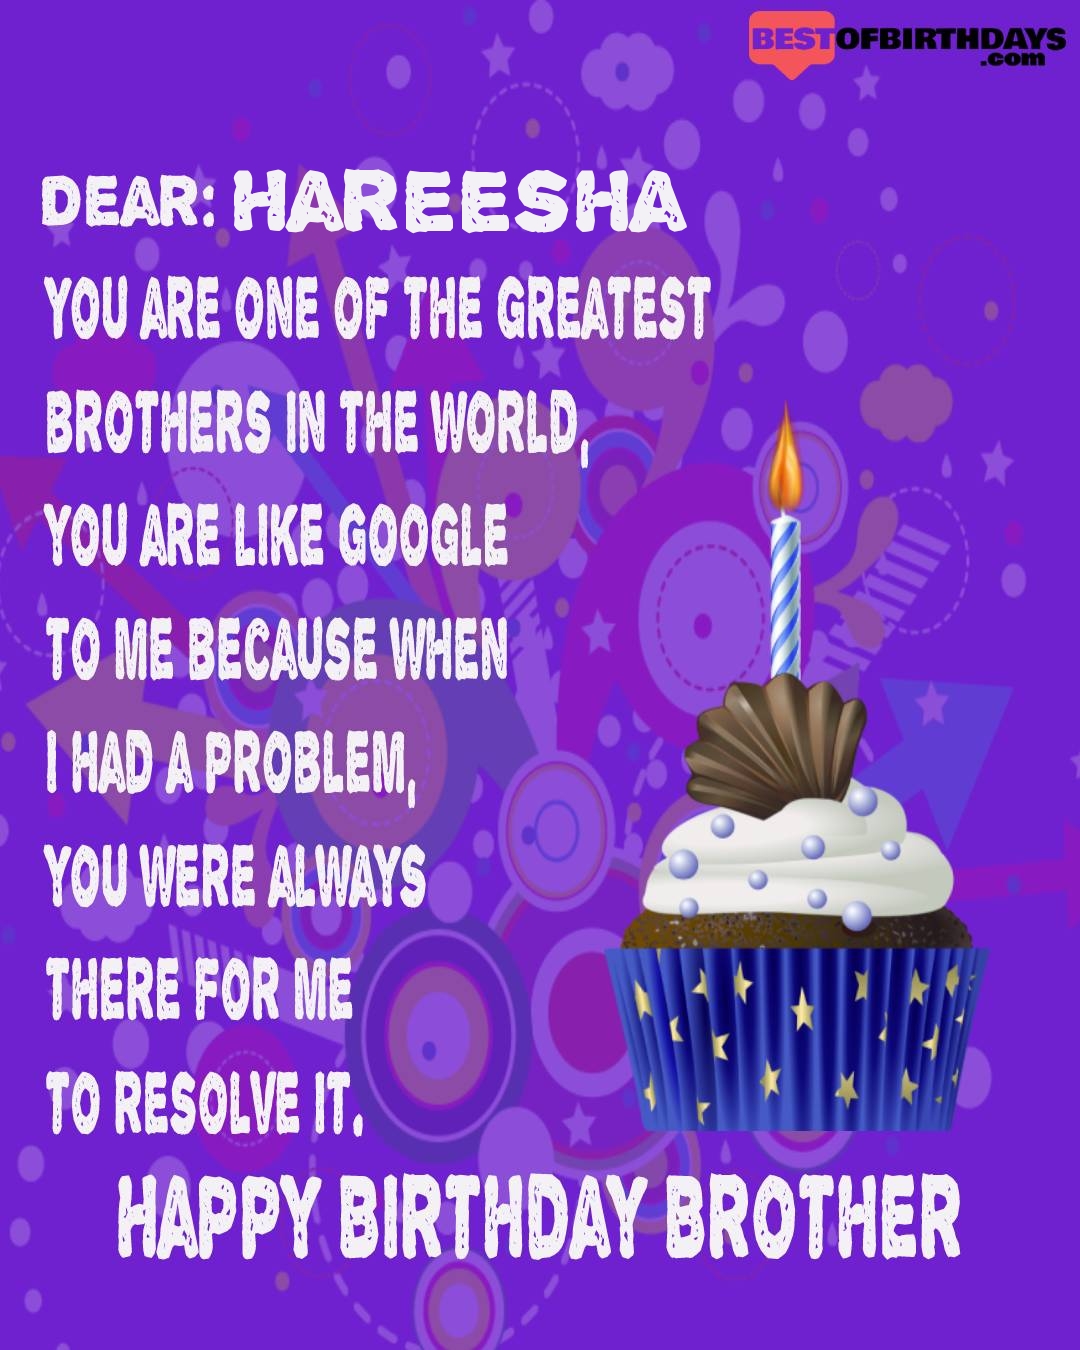 Happy birthday hareesha bhai brother bro